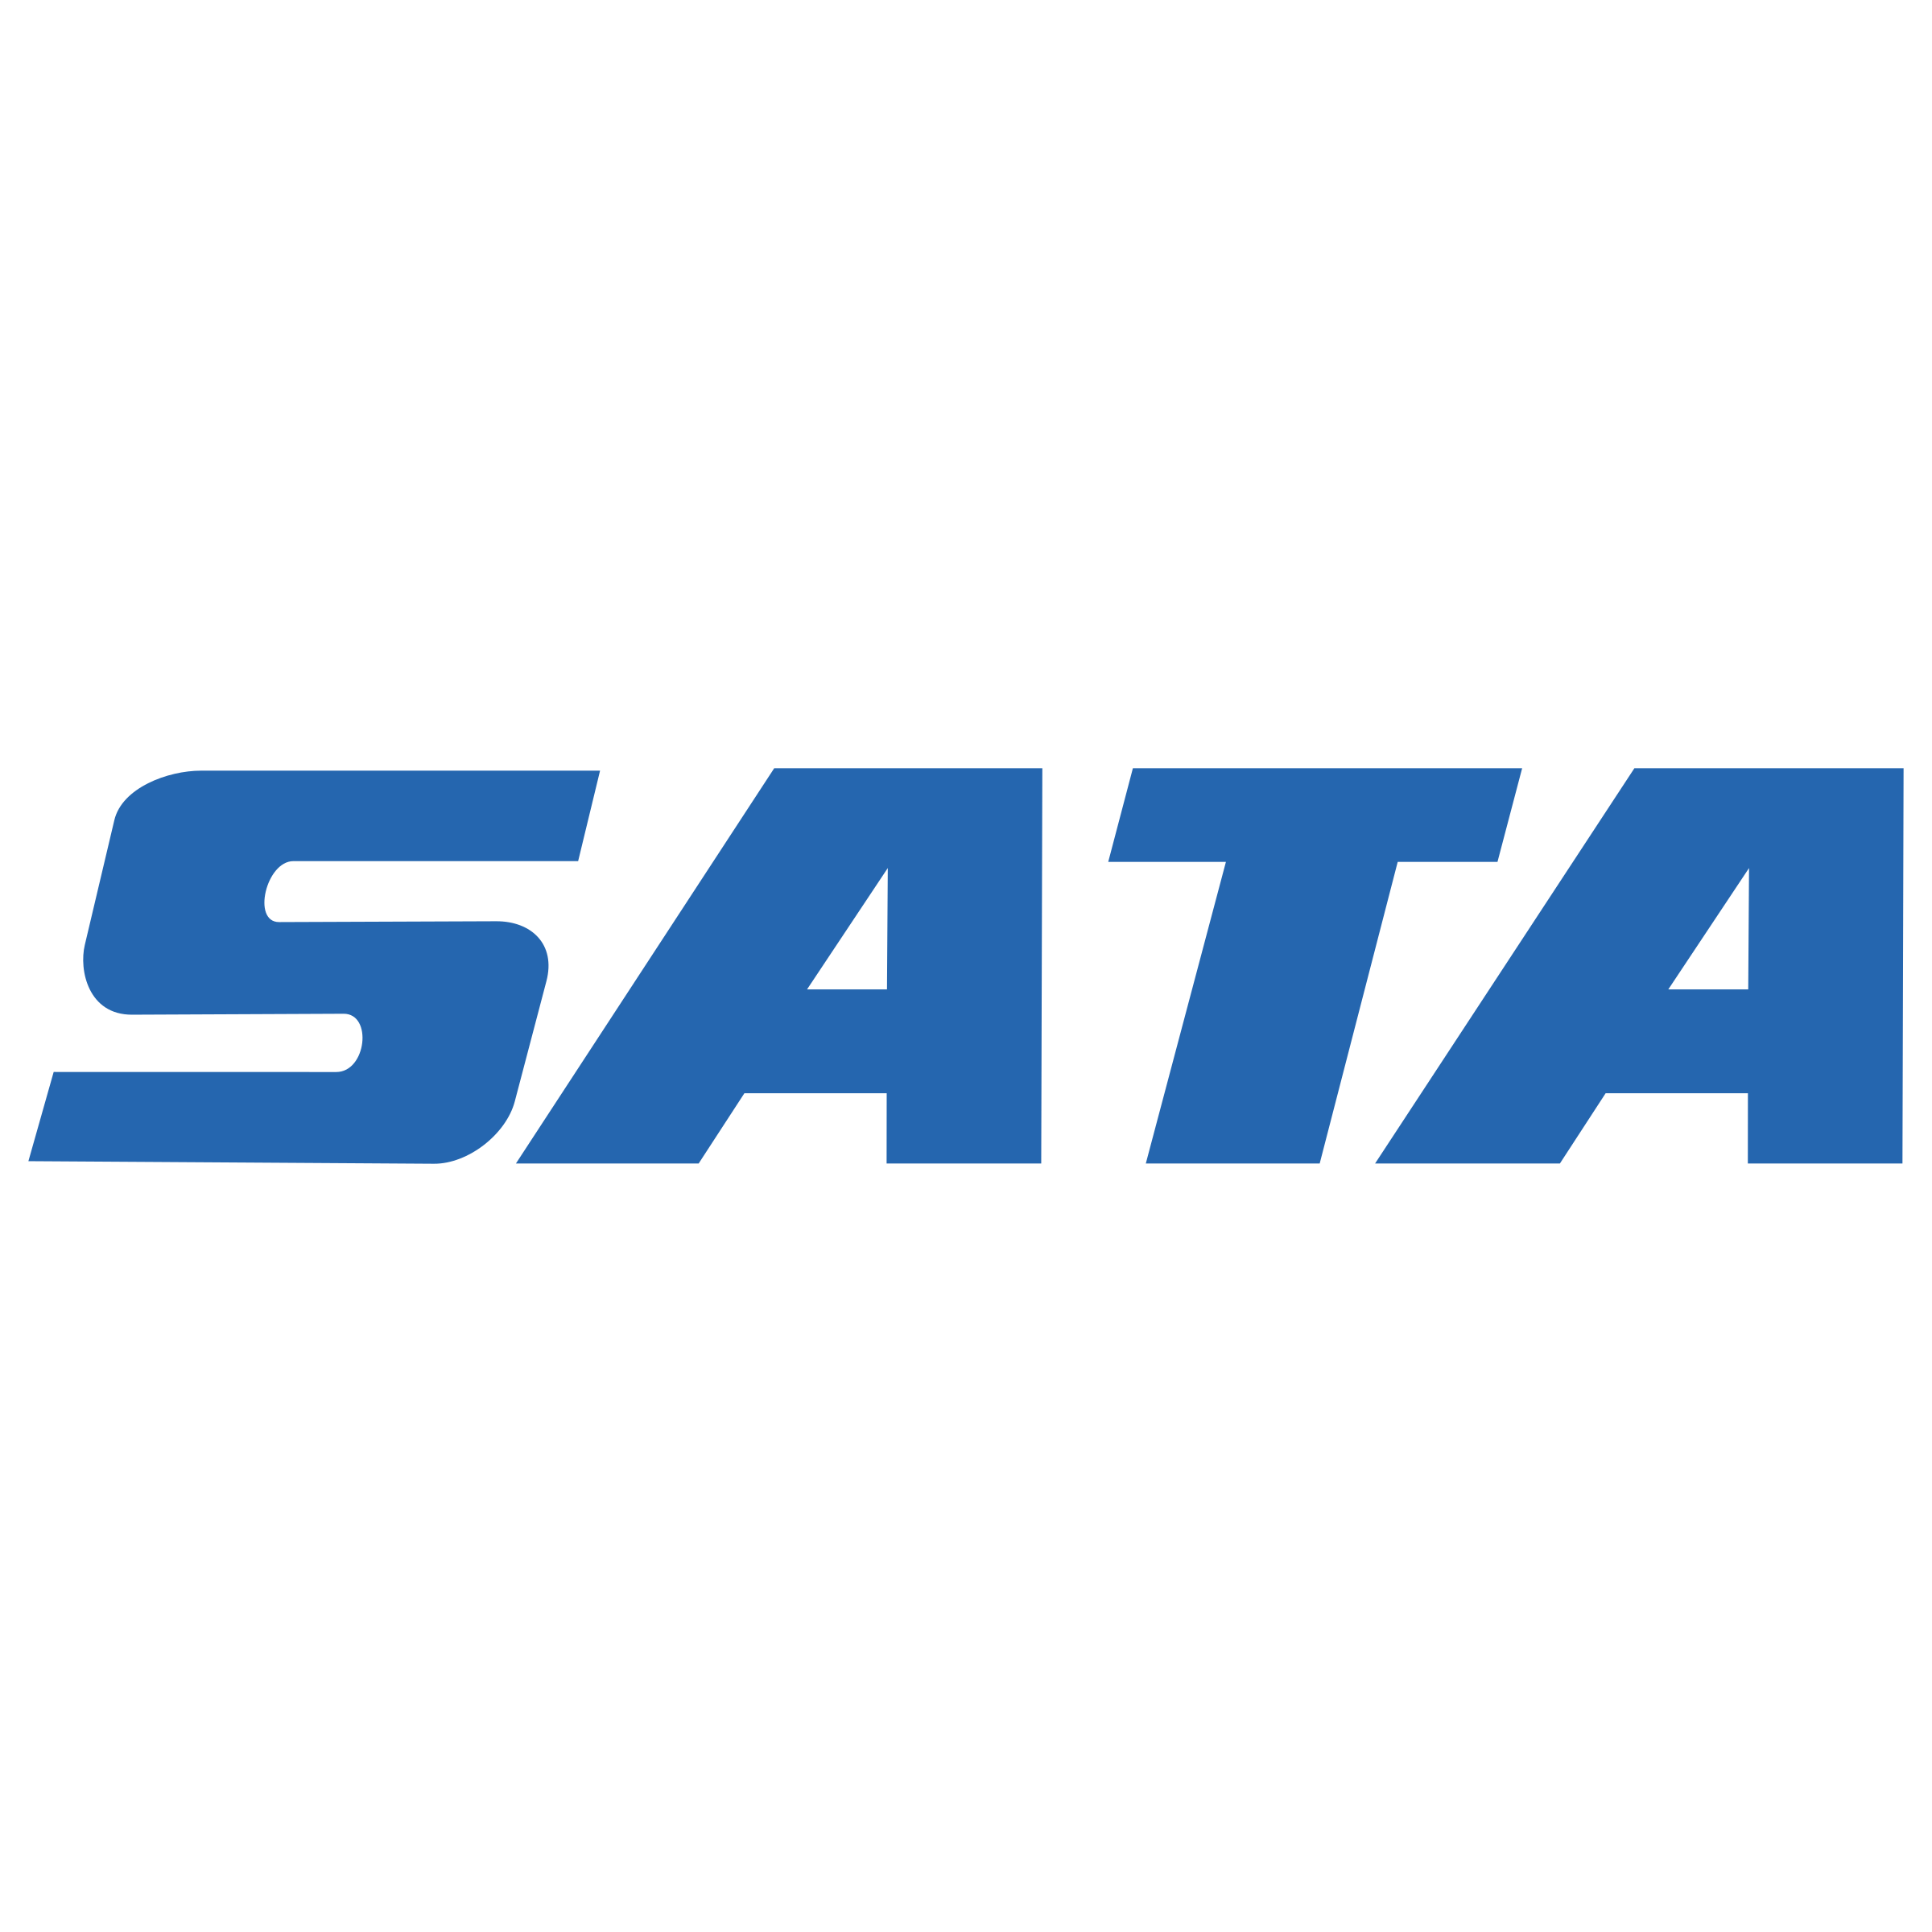 SATA Logo - Sata Logo PNG Transparent & SVG Vector - Freebie Supply